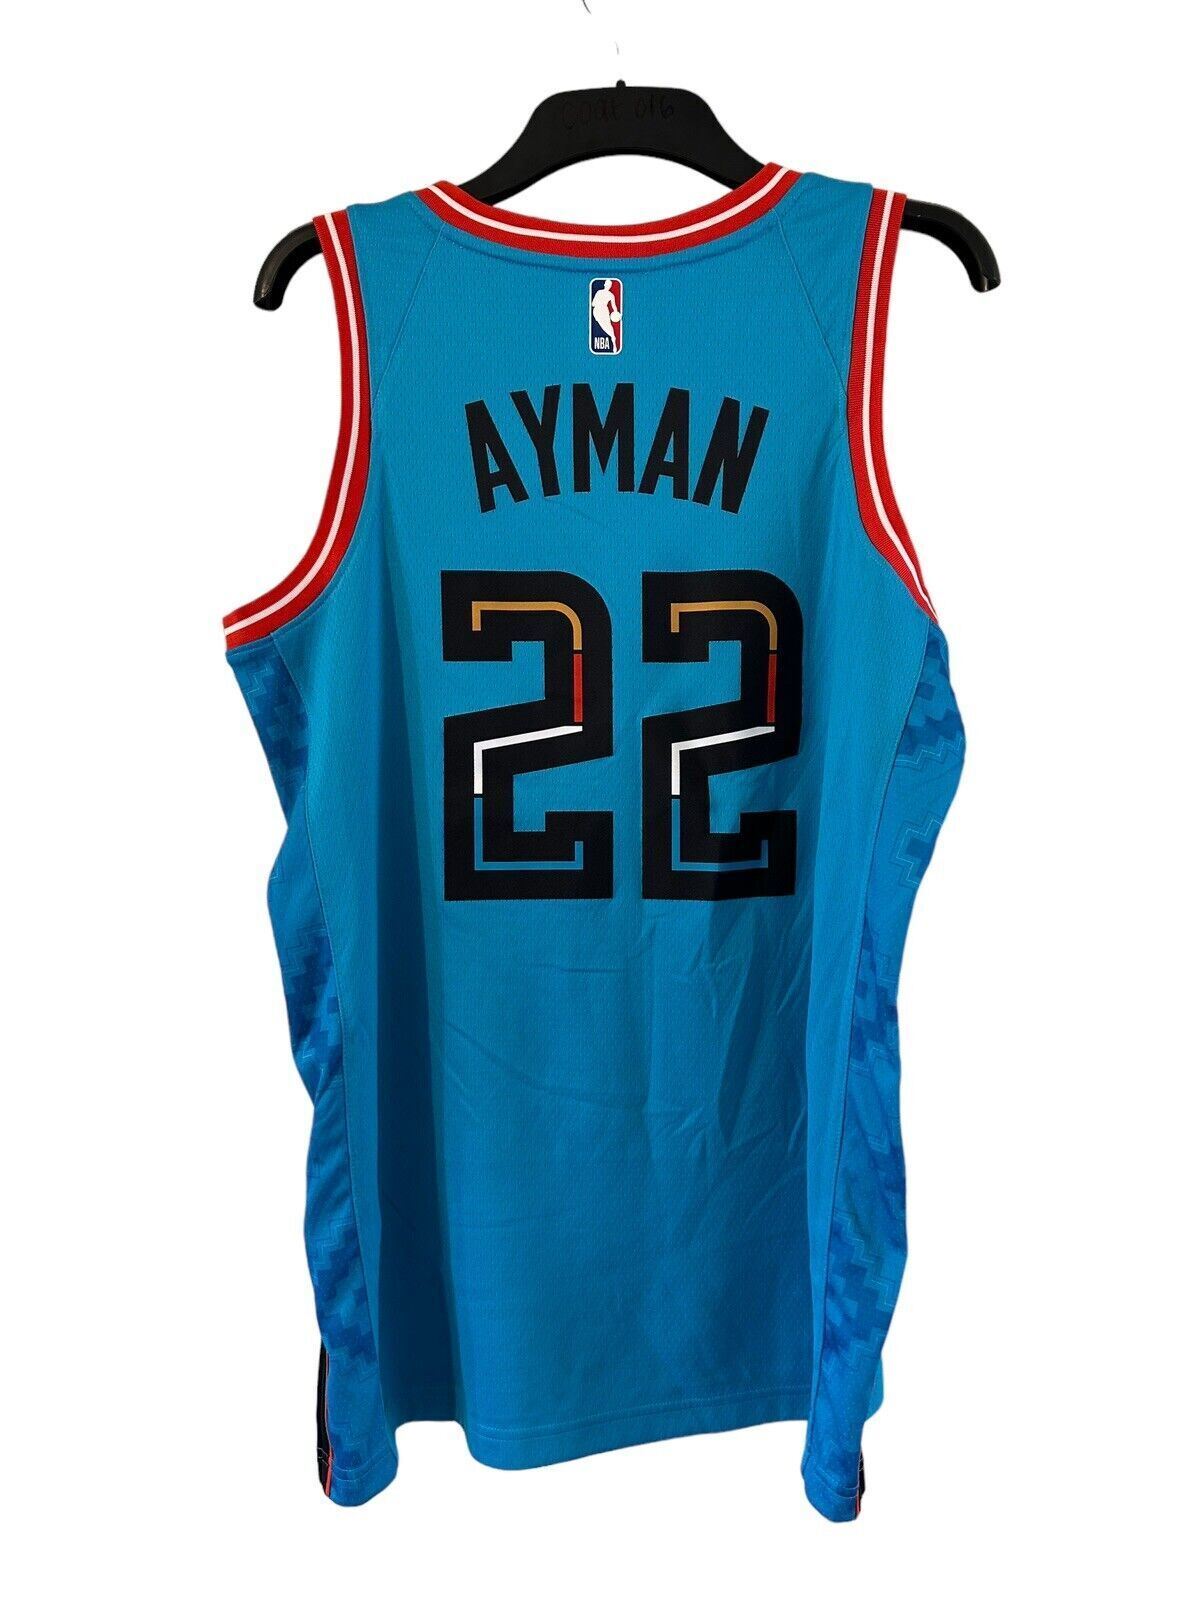 Nike NBA Phoenix Suns City Edition Jersey AYMAN 22 Mens Medium *DF*